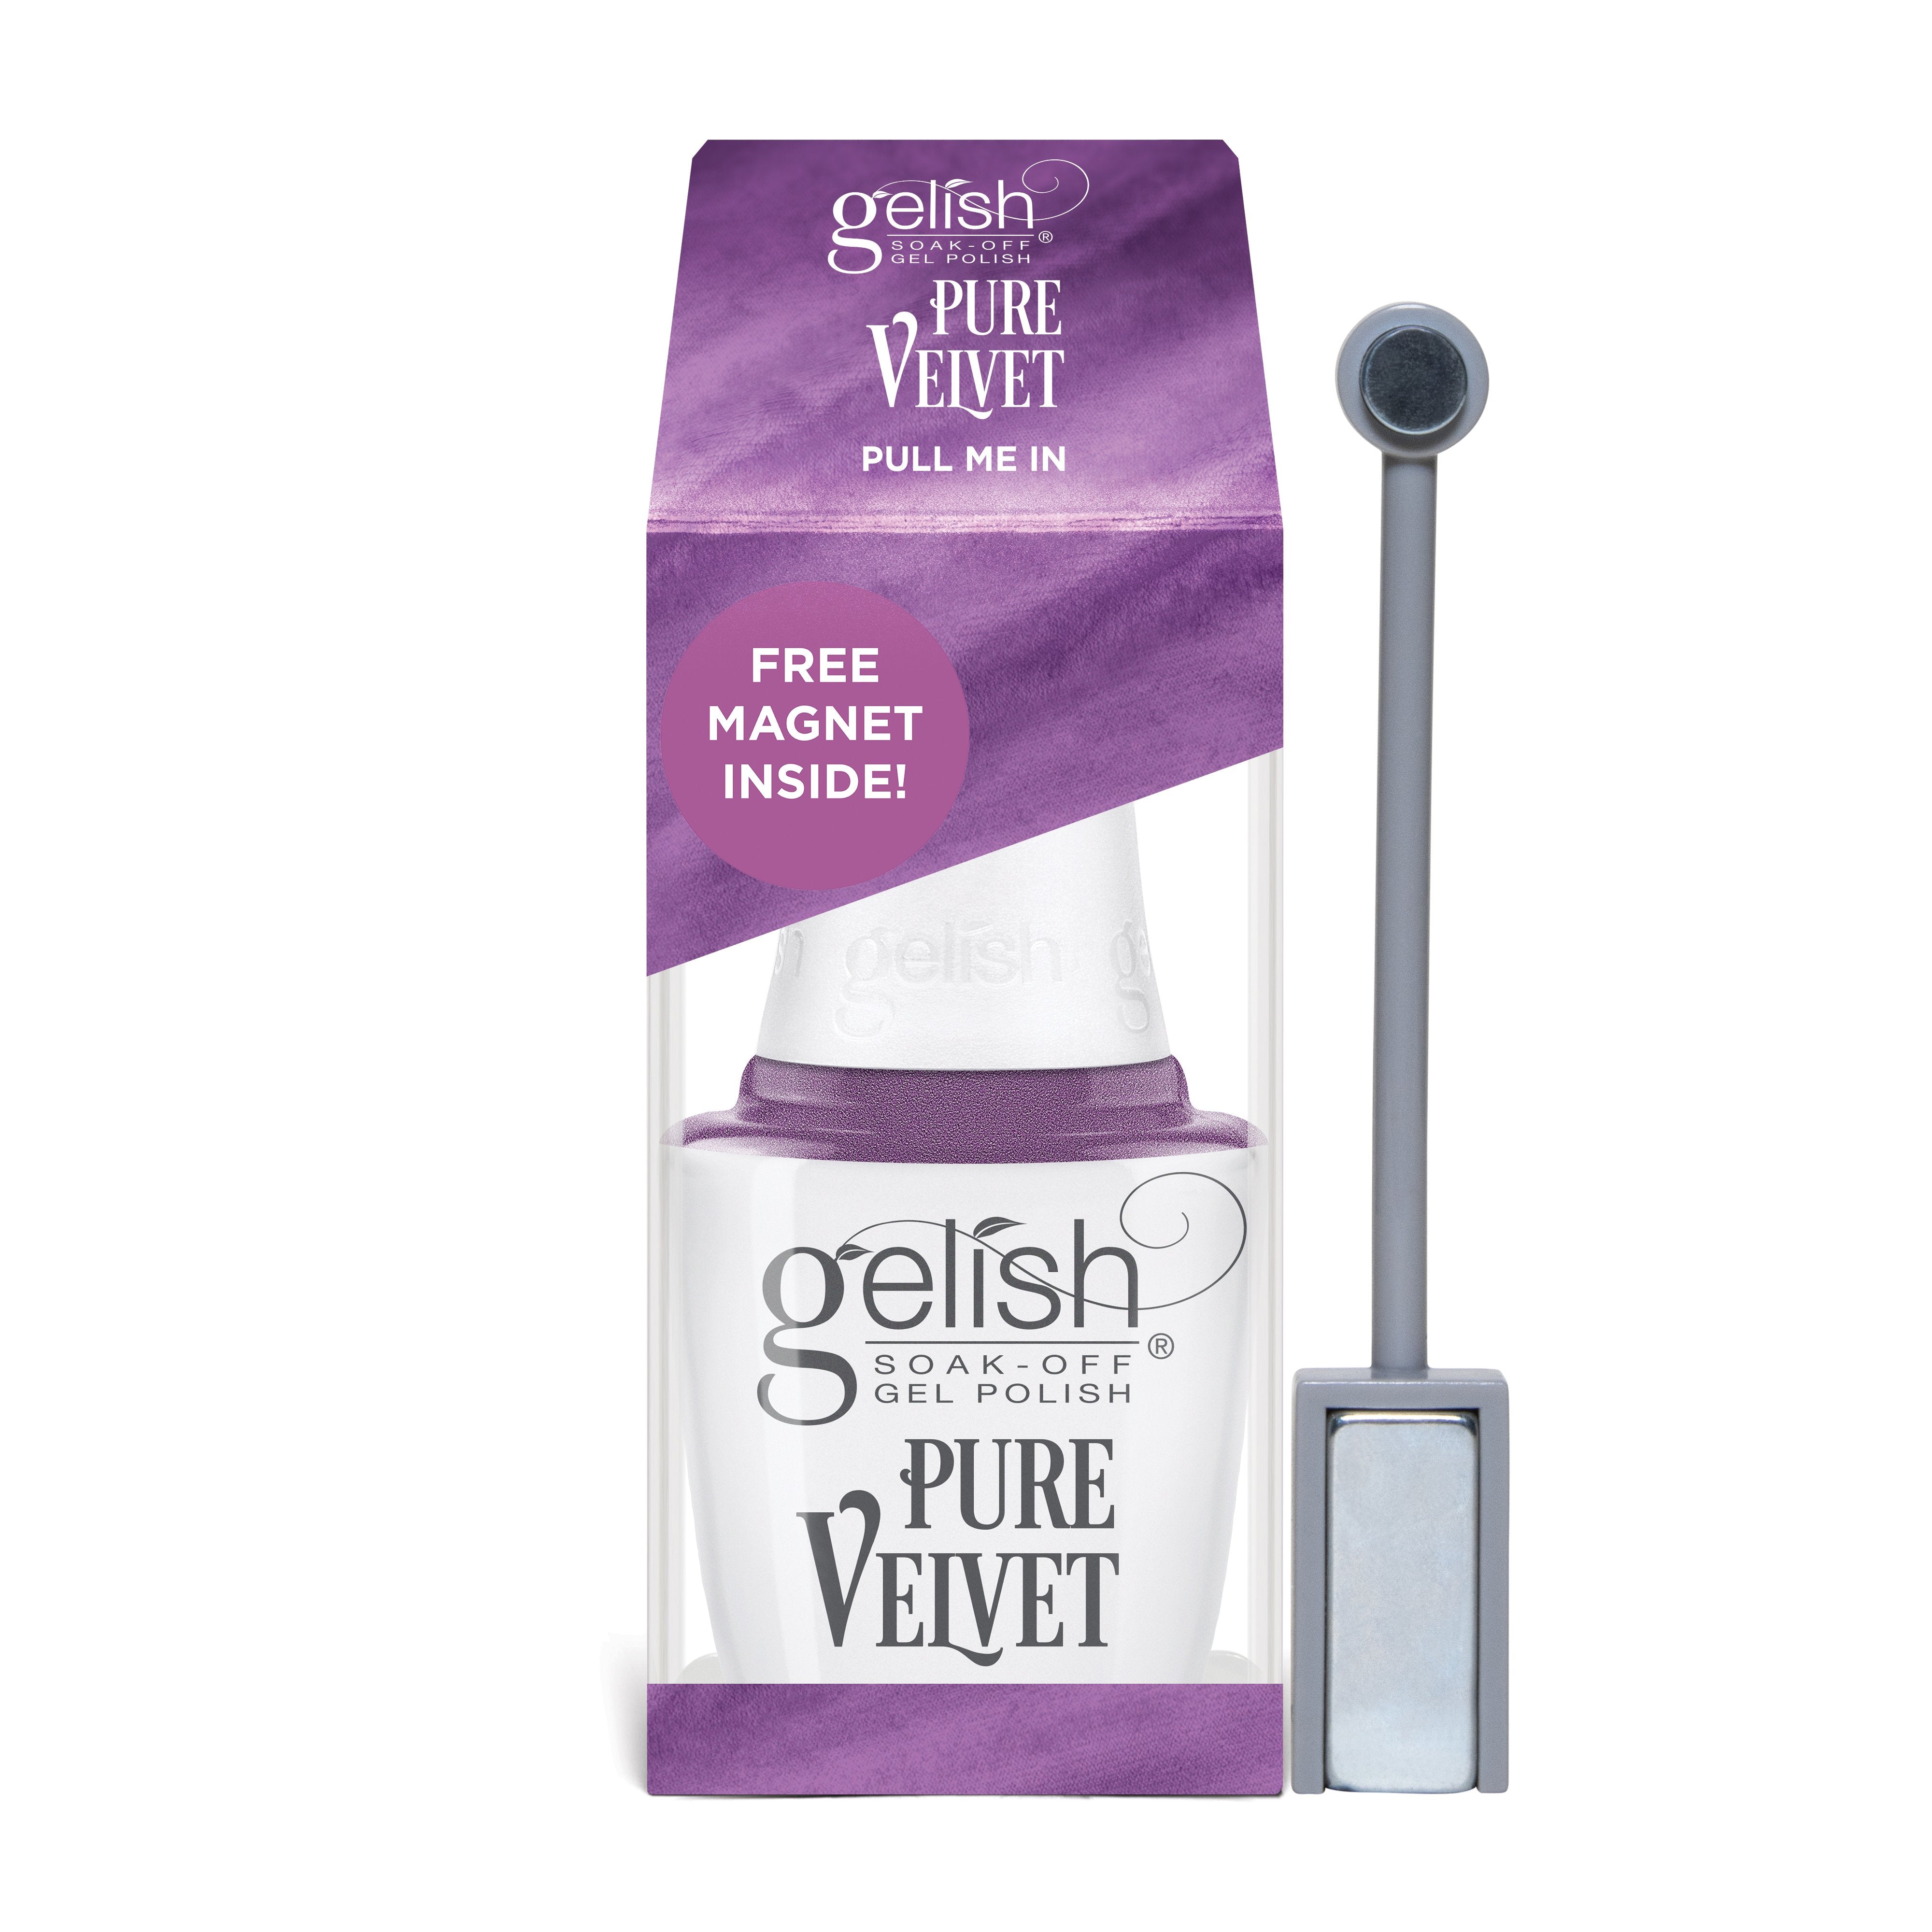 Gelish Pure Velvet - Pull me in